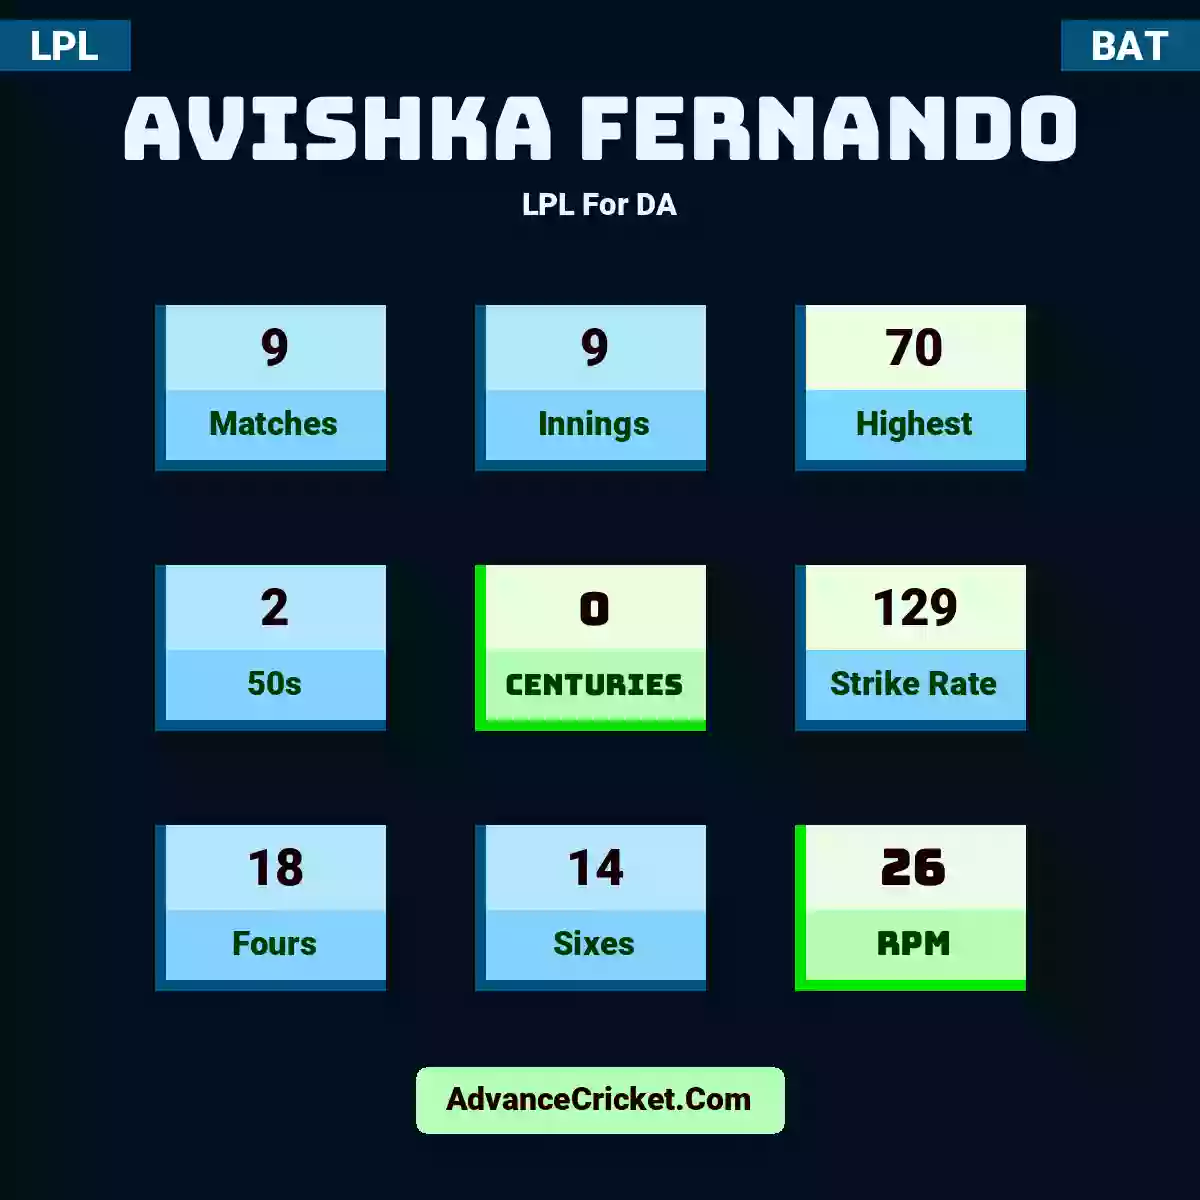 Avishka Fernando LPL  For DA, Avishka Fernando played 9 matches, scored 70 runs as highest, 2 half-centuries, and 0 centuries, with a strike rate of 129. A.Fernando hit 18 fours and 14 sixes, with an RPM of 26.